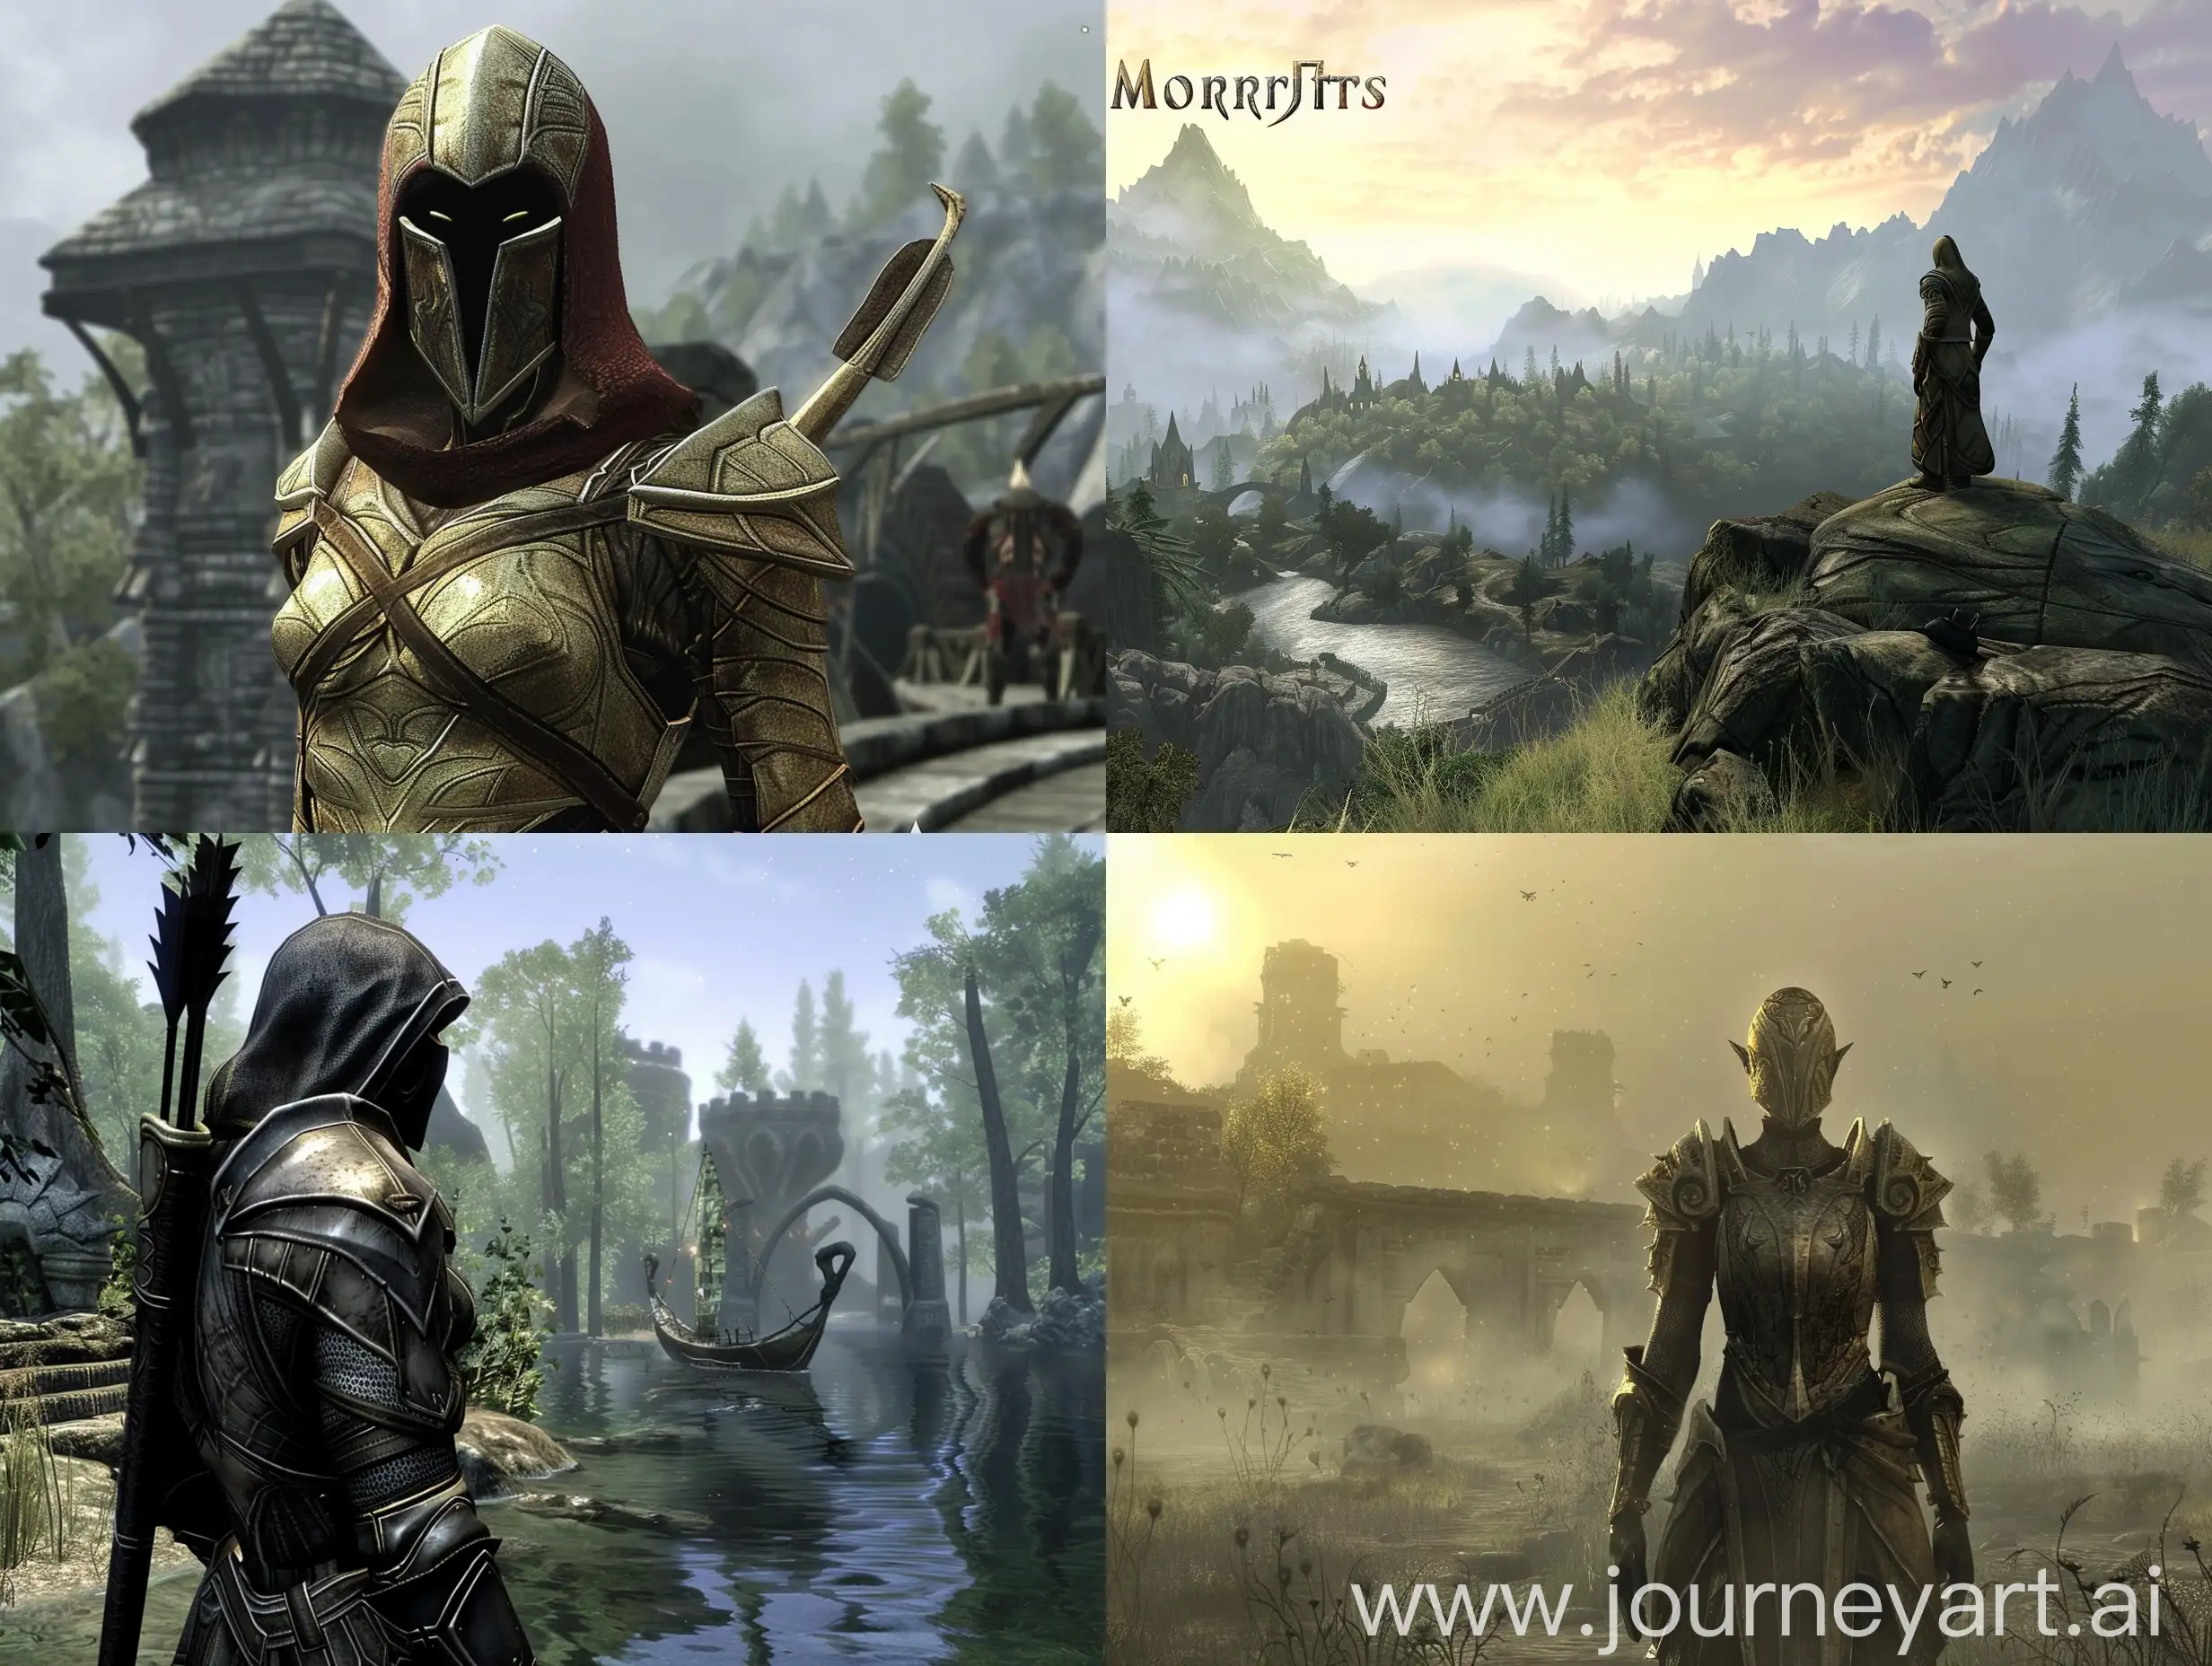 Mystical-Landscape-of-Morrowind-at-Sunset